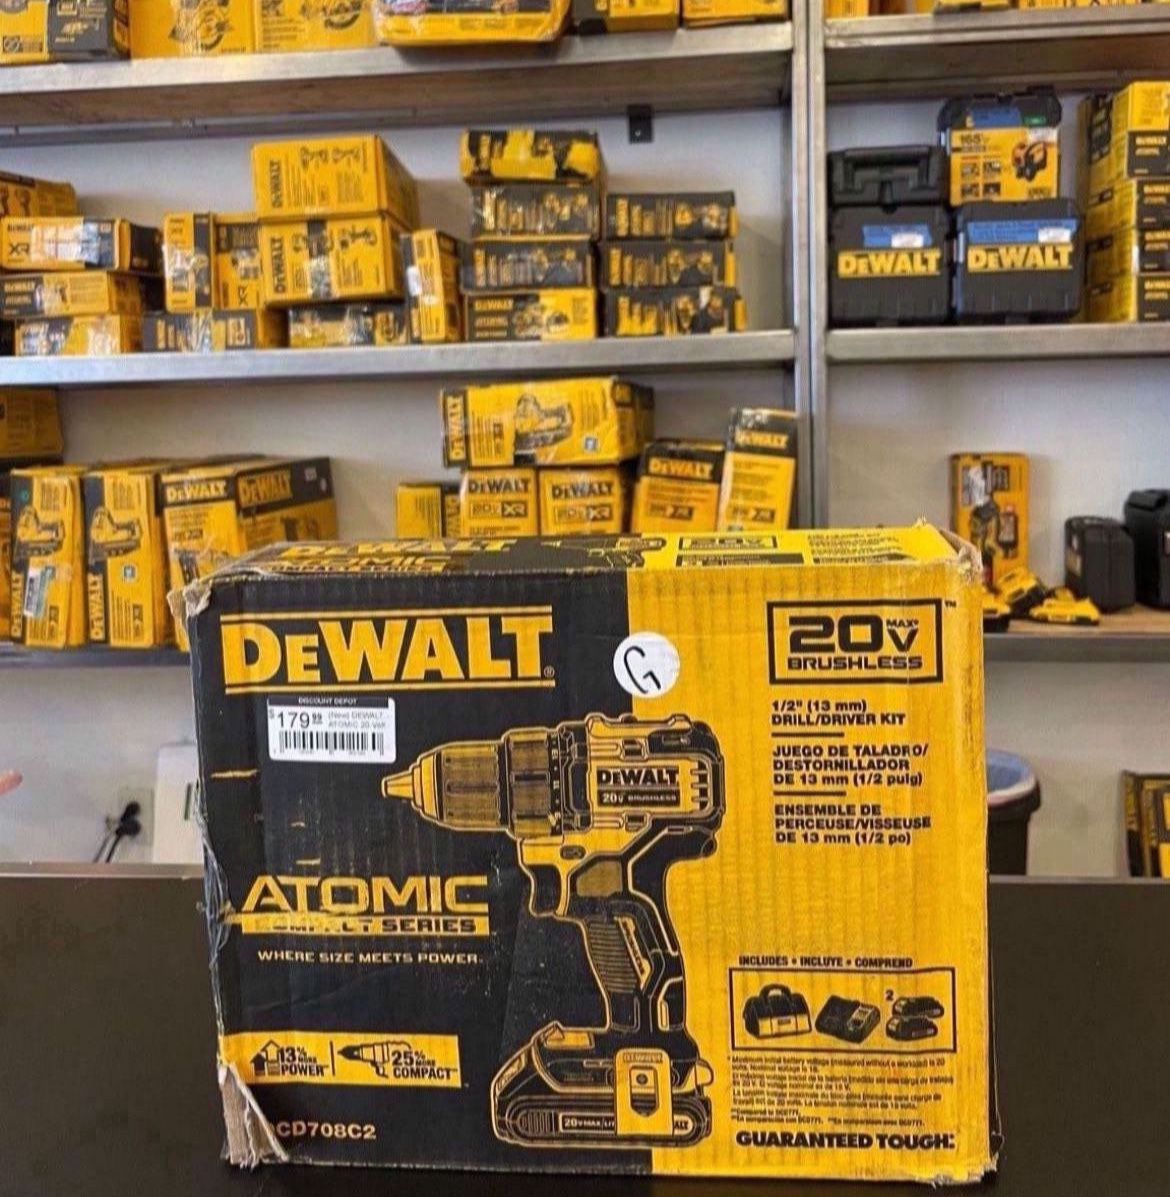 DEWALT Atomic 20-Volt MAX Cordless Brushless Compact 1/2 in. Hammer Drill, (2) 20-Volt 1.3Ah Batteries, Charger & Bag DCD708C2